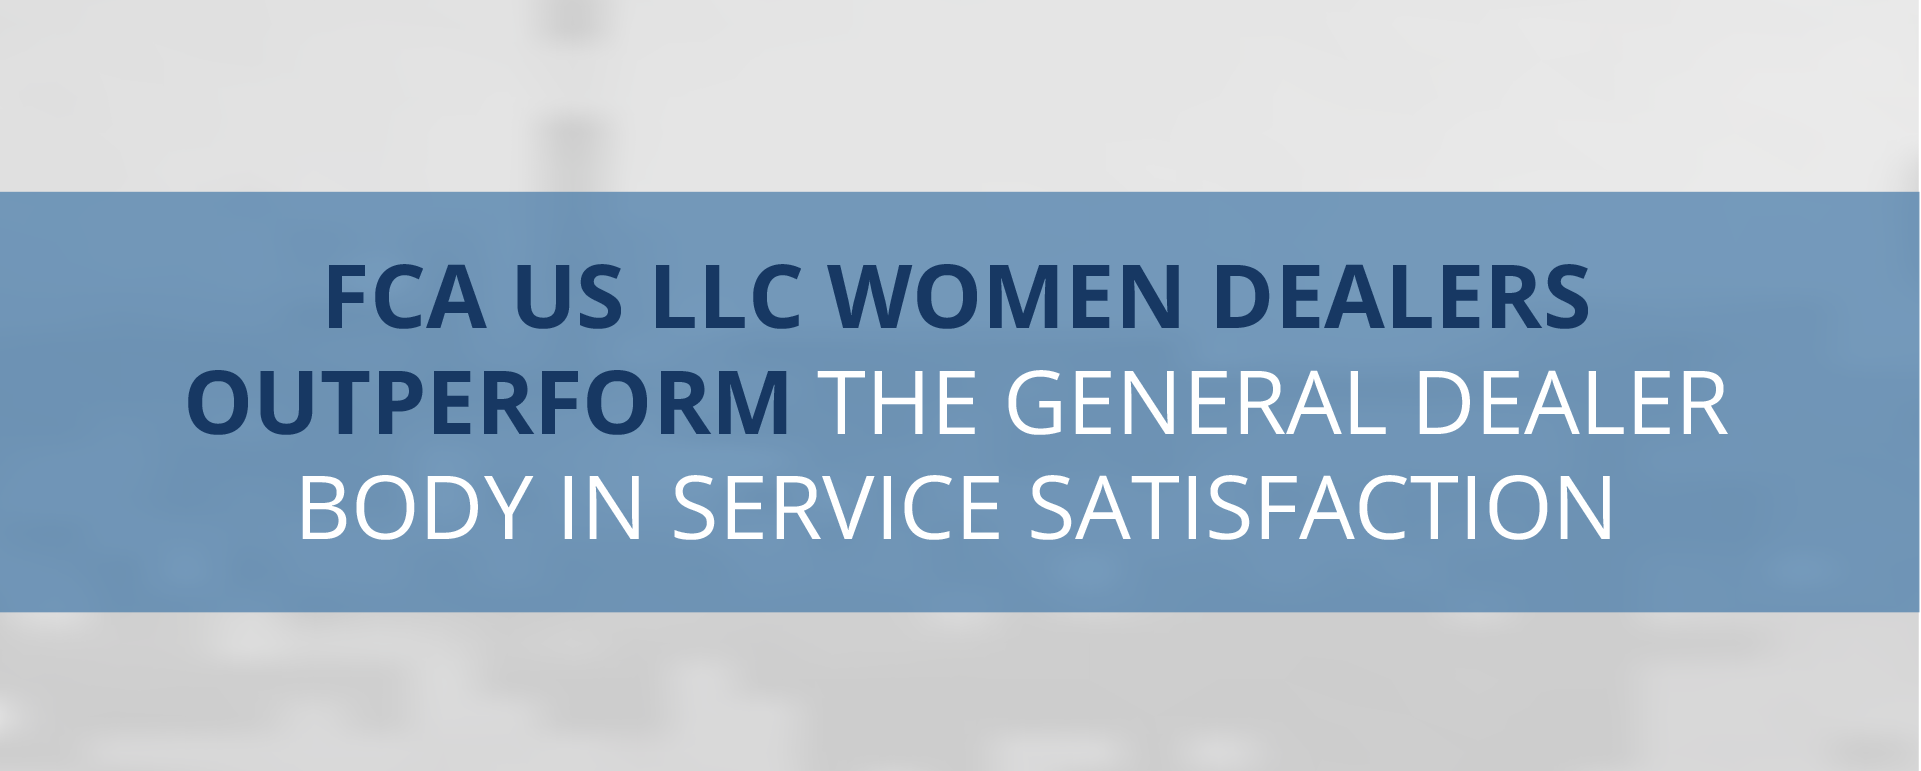 FCA US LLC women dealers outperform the general dealer body in service satisfaction